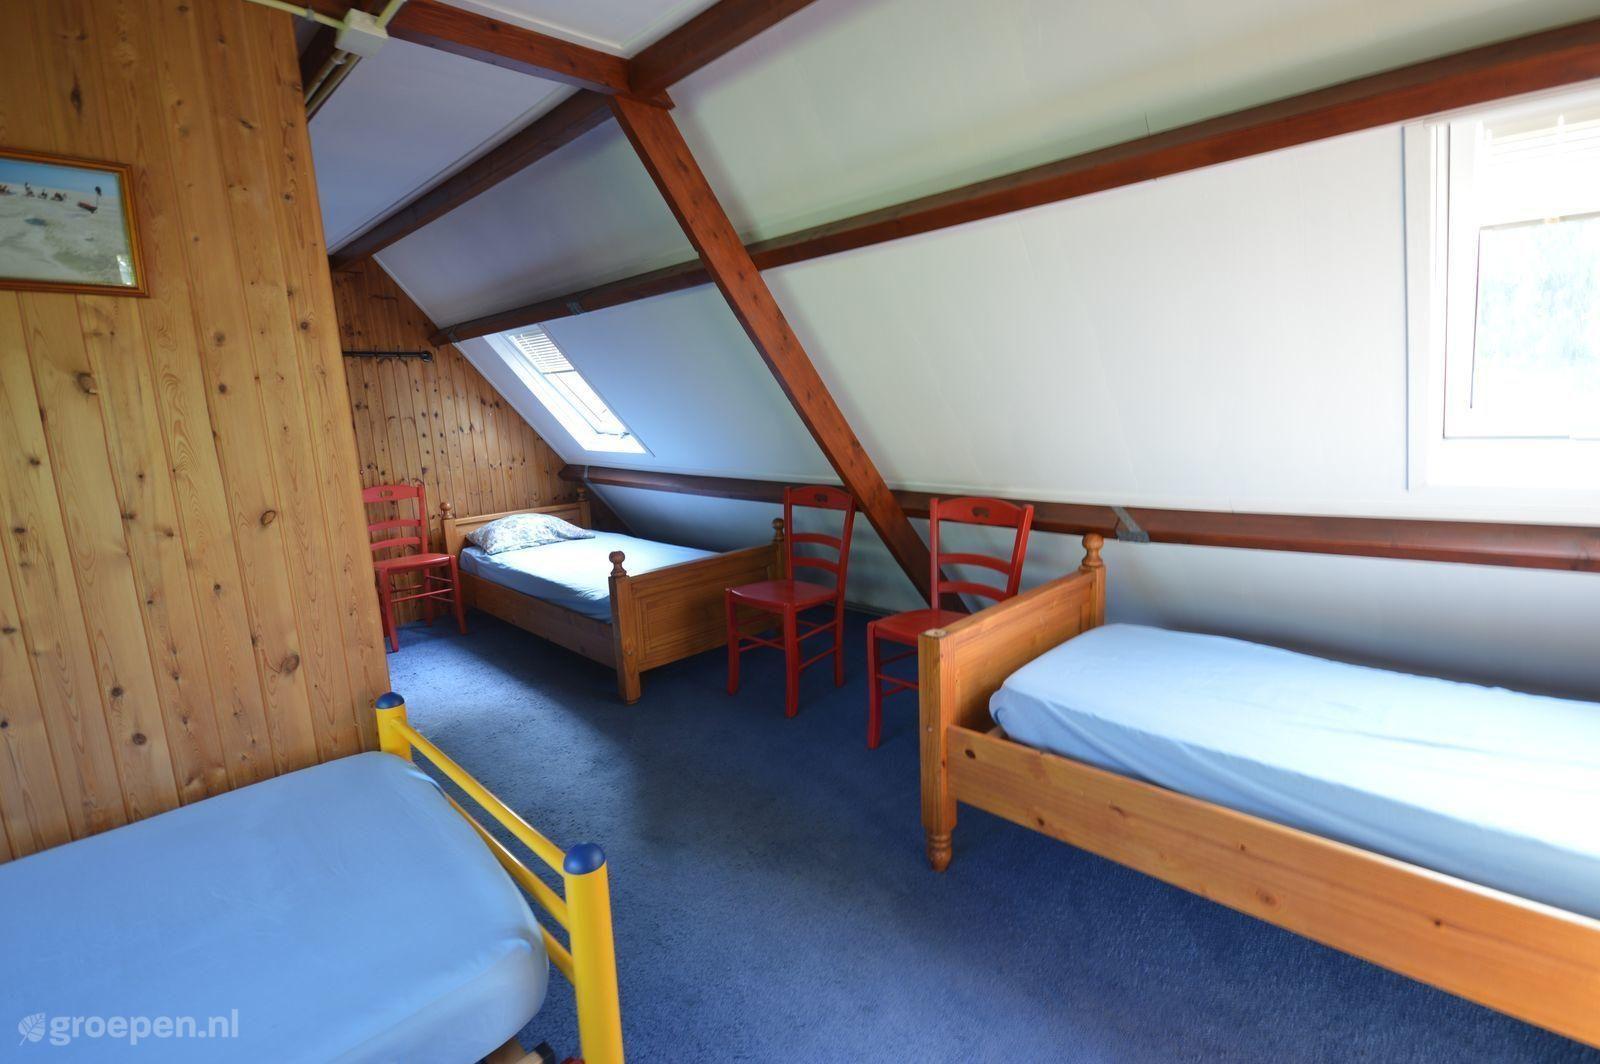 Group accommodation Wirdum